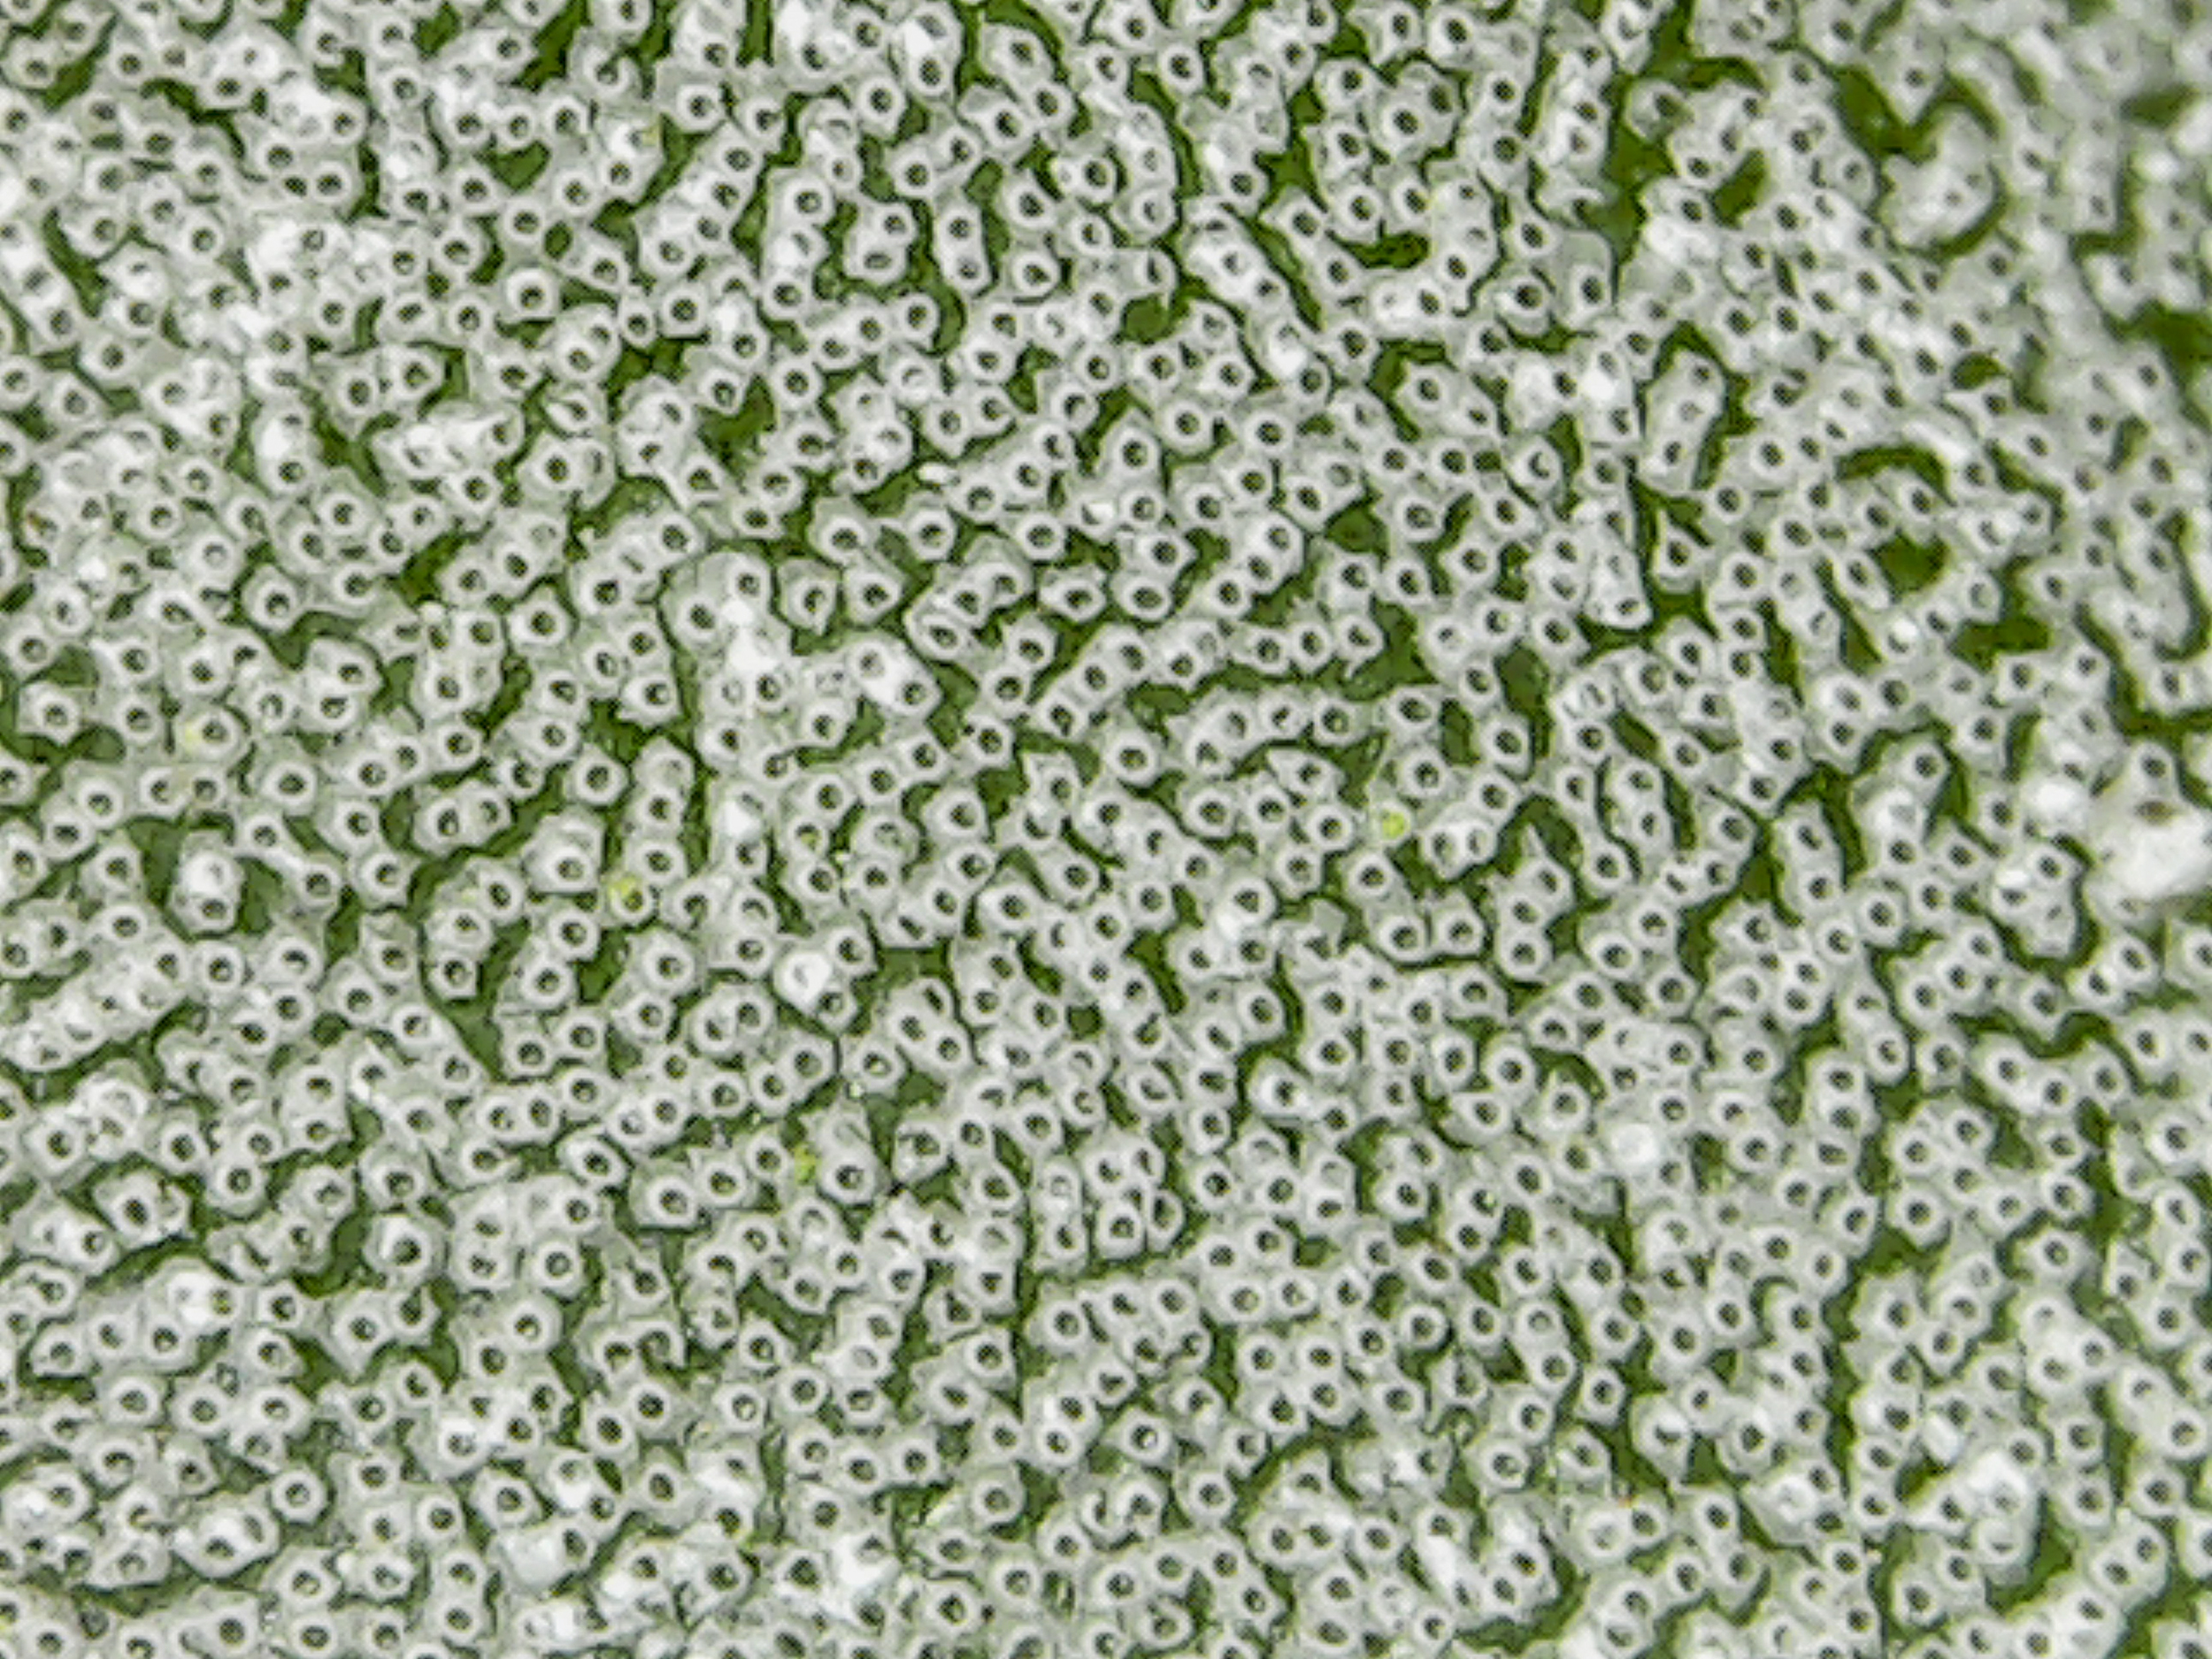 Intricate leaf trichome patternof Tillandsia achyrostachy